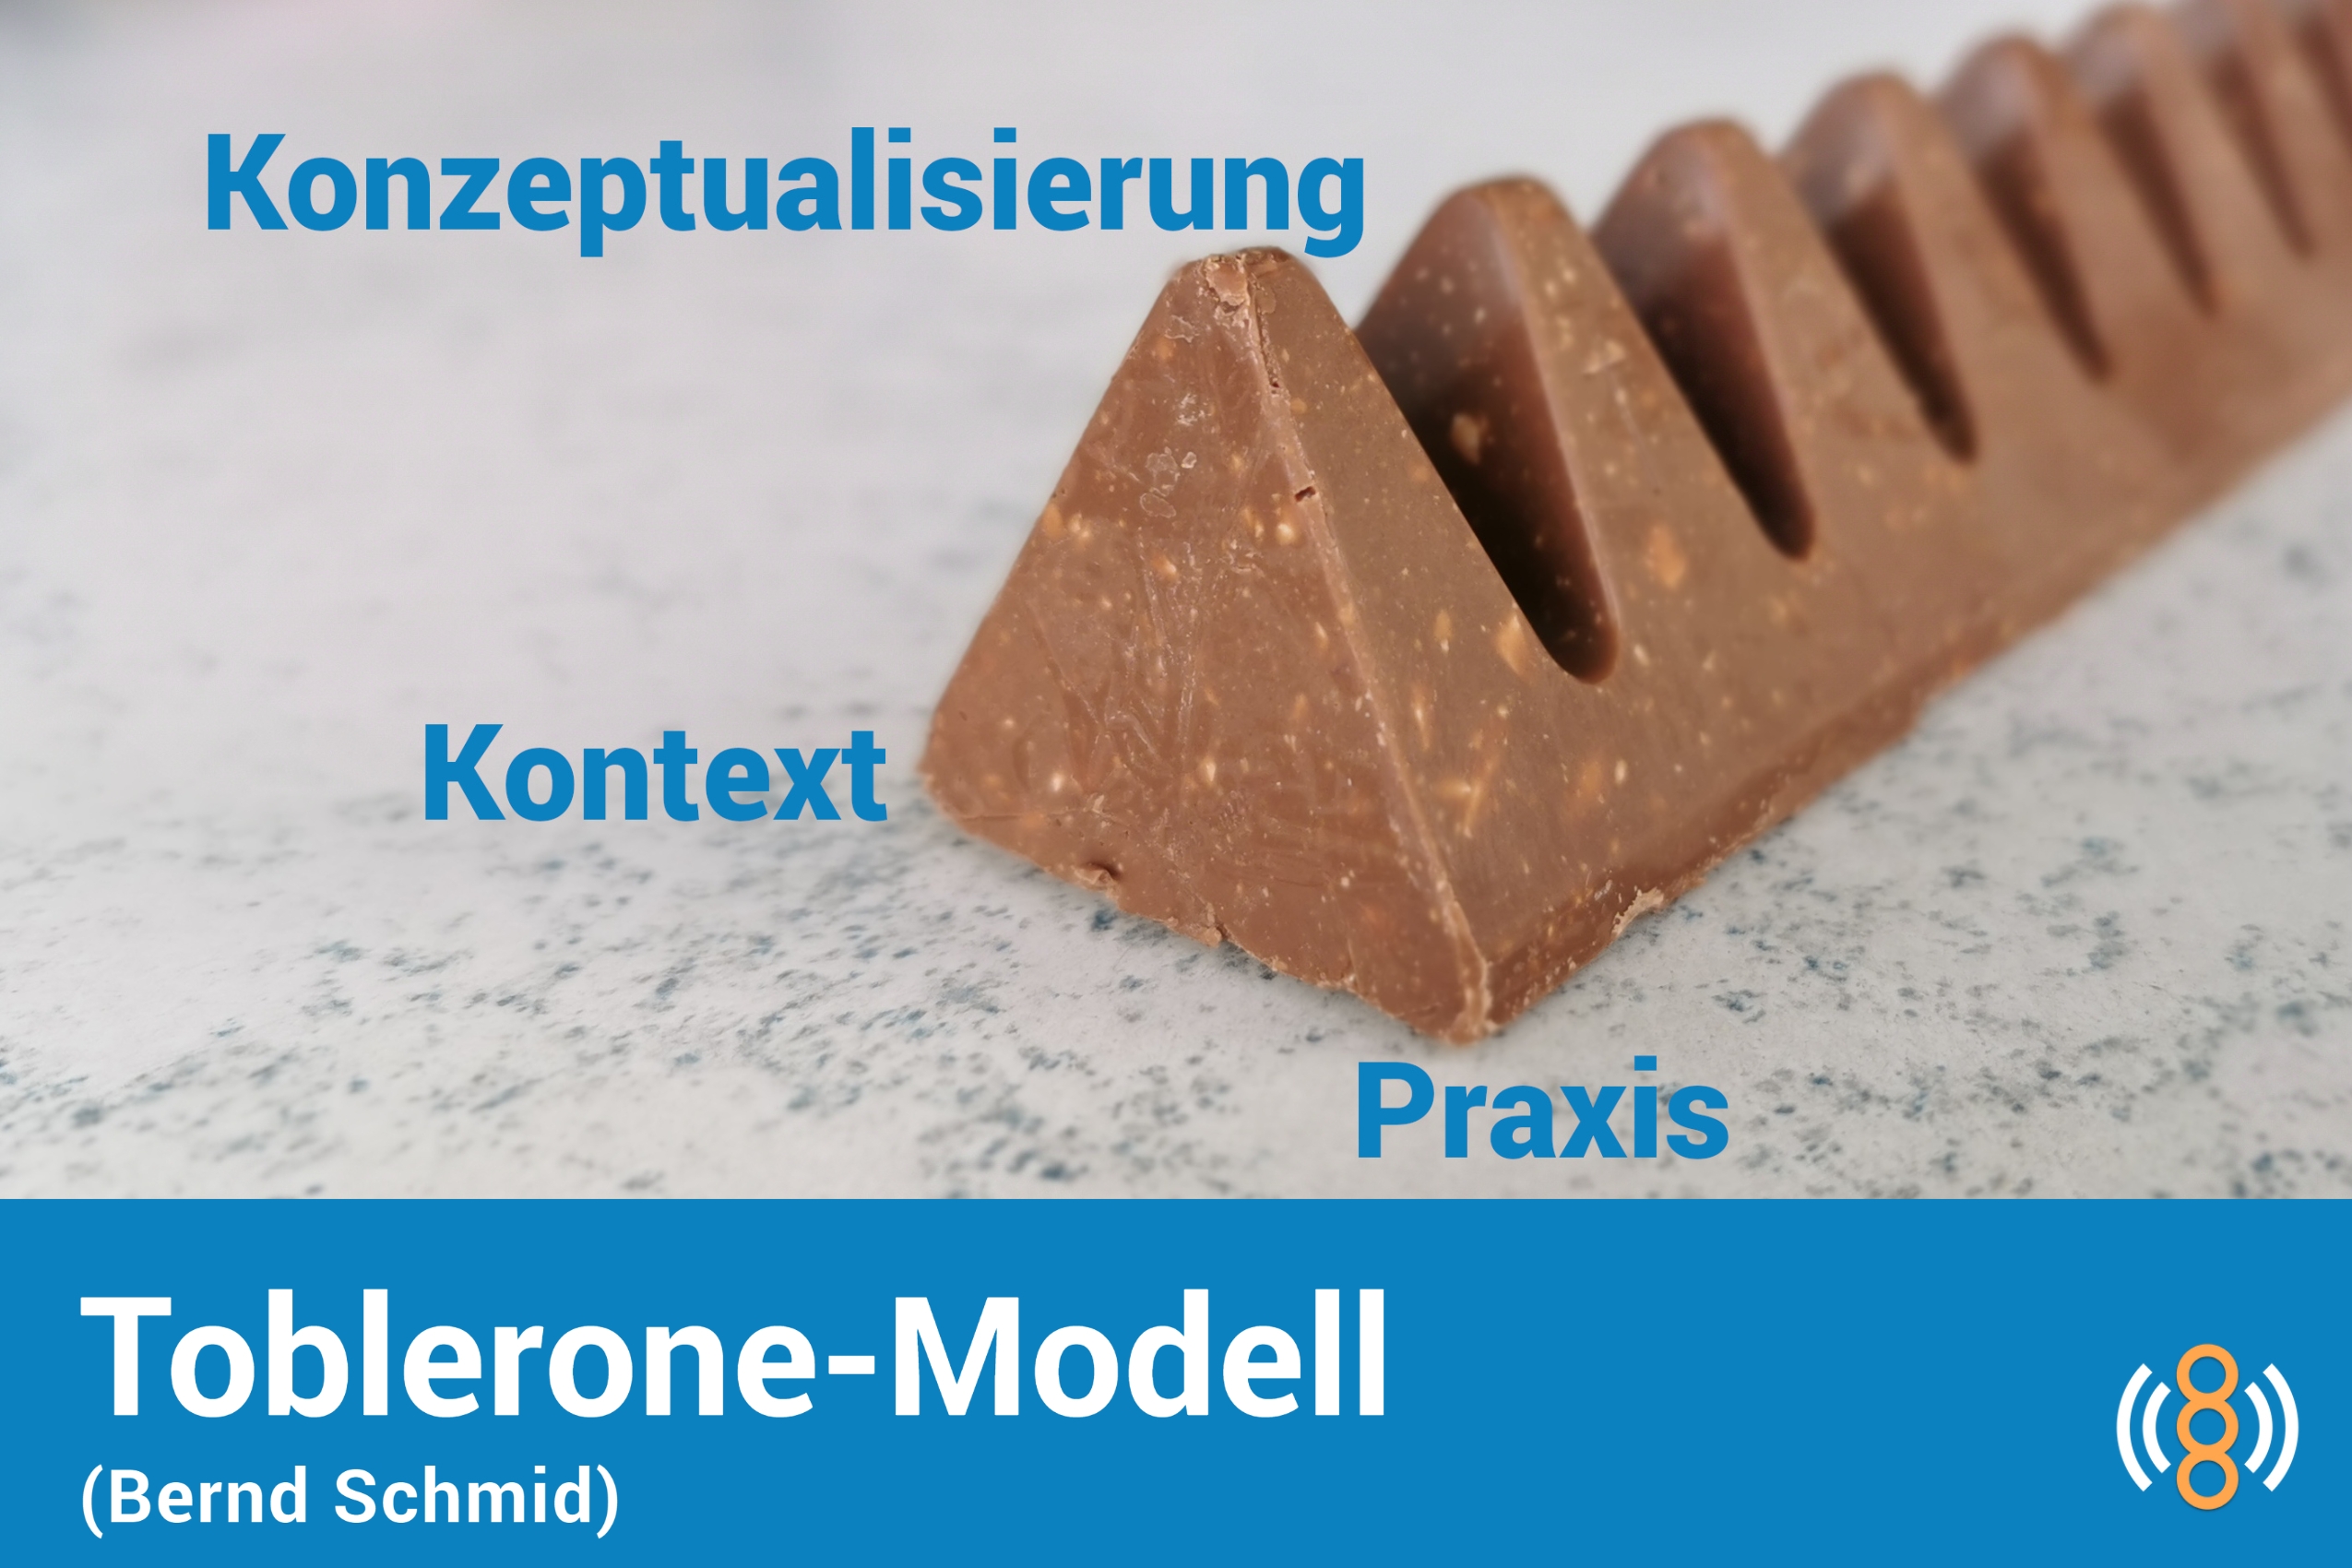 Toblerone-Modell (Bernd Schmid)